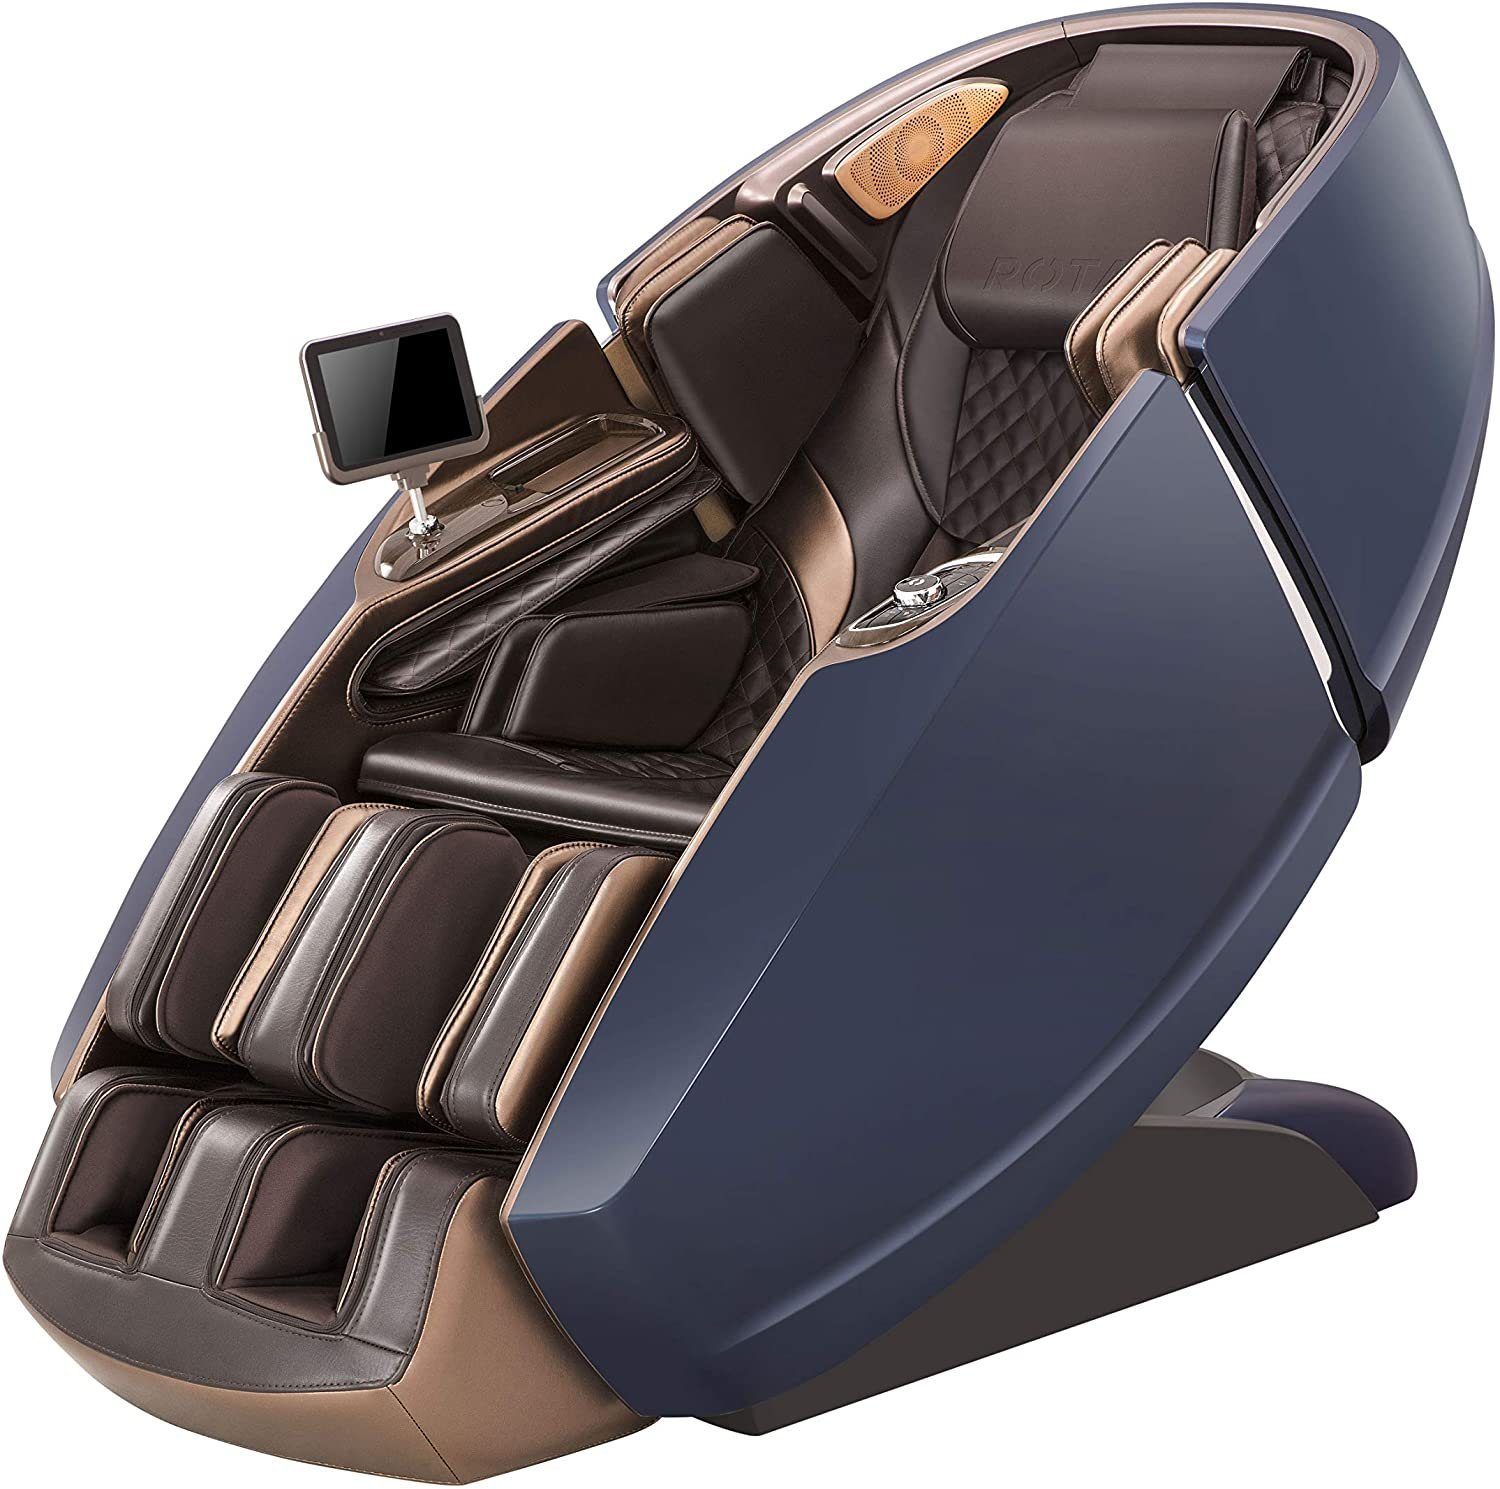 NAIPO Massagesessel, 3D High-End Massagestuhl mit Tablet, Raumkapsel-Design BLAU-BRAUN